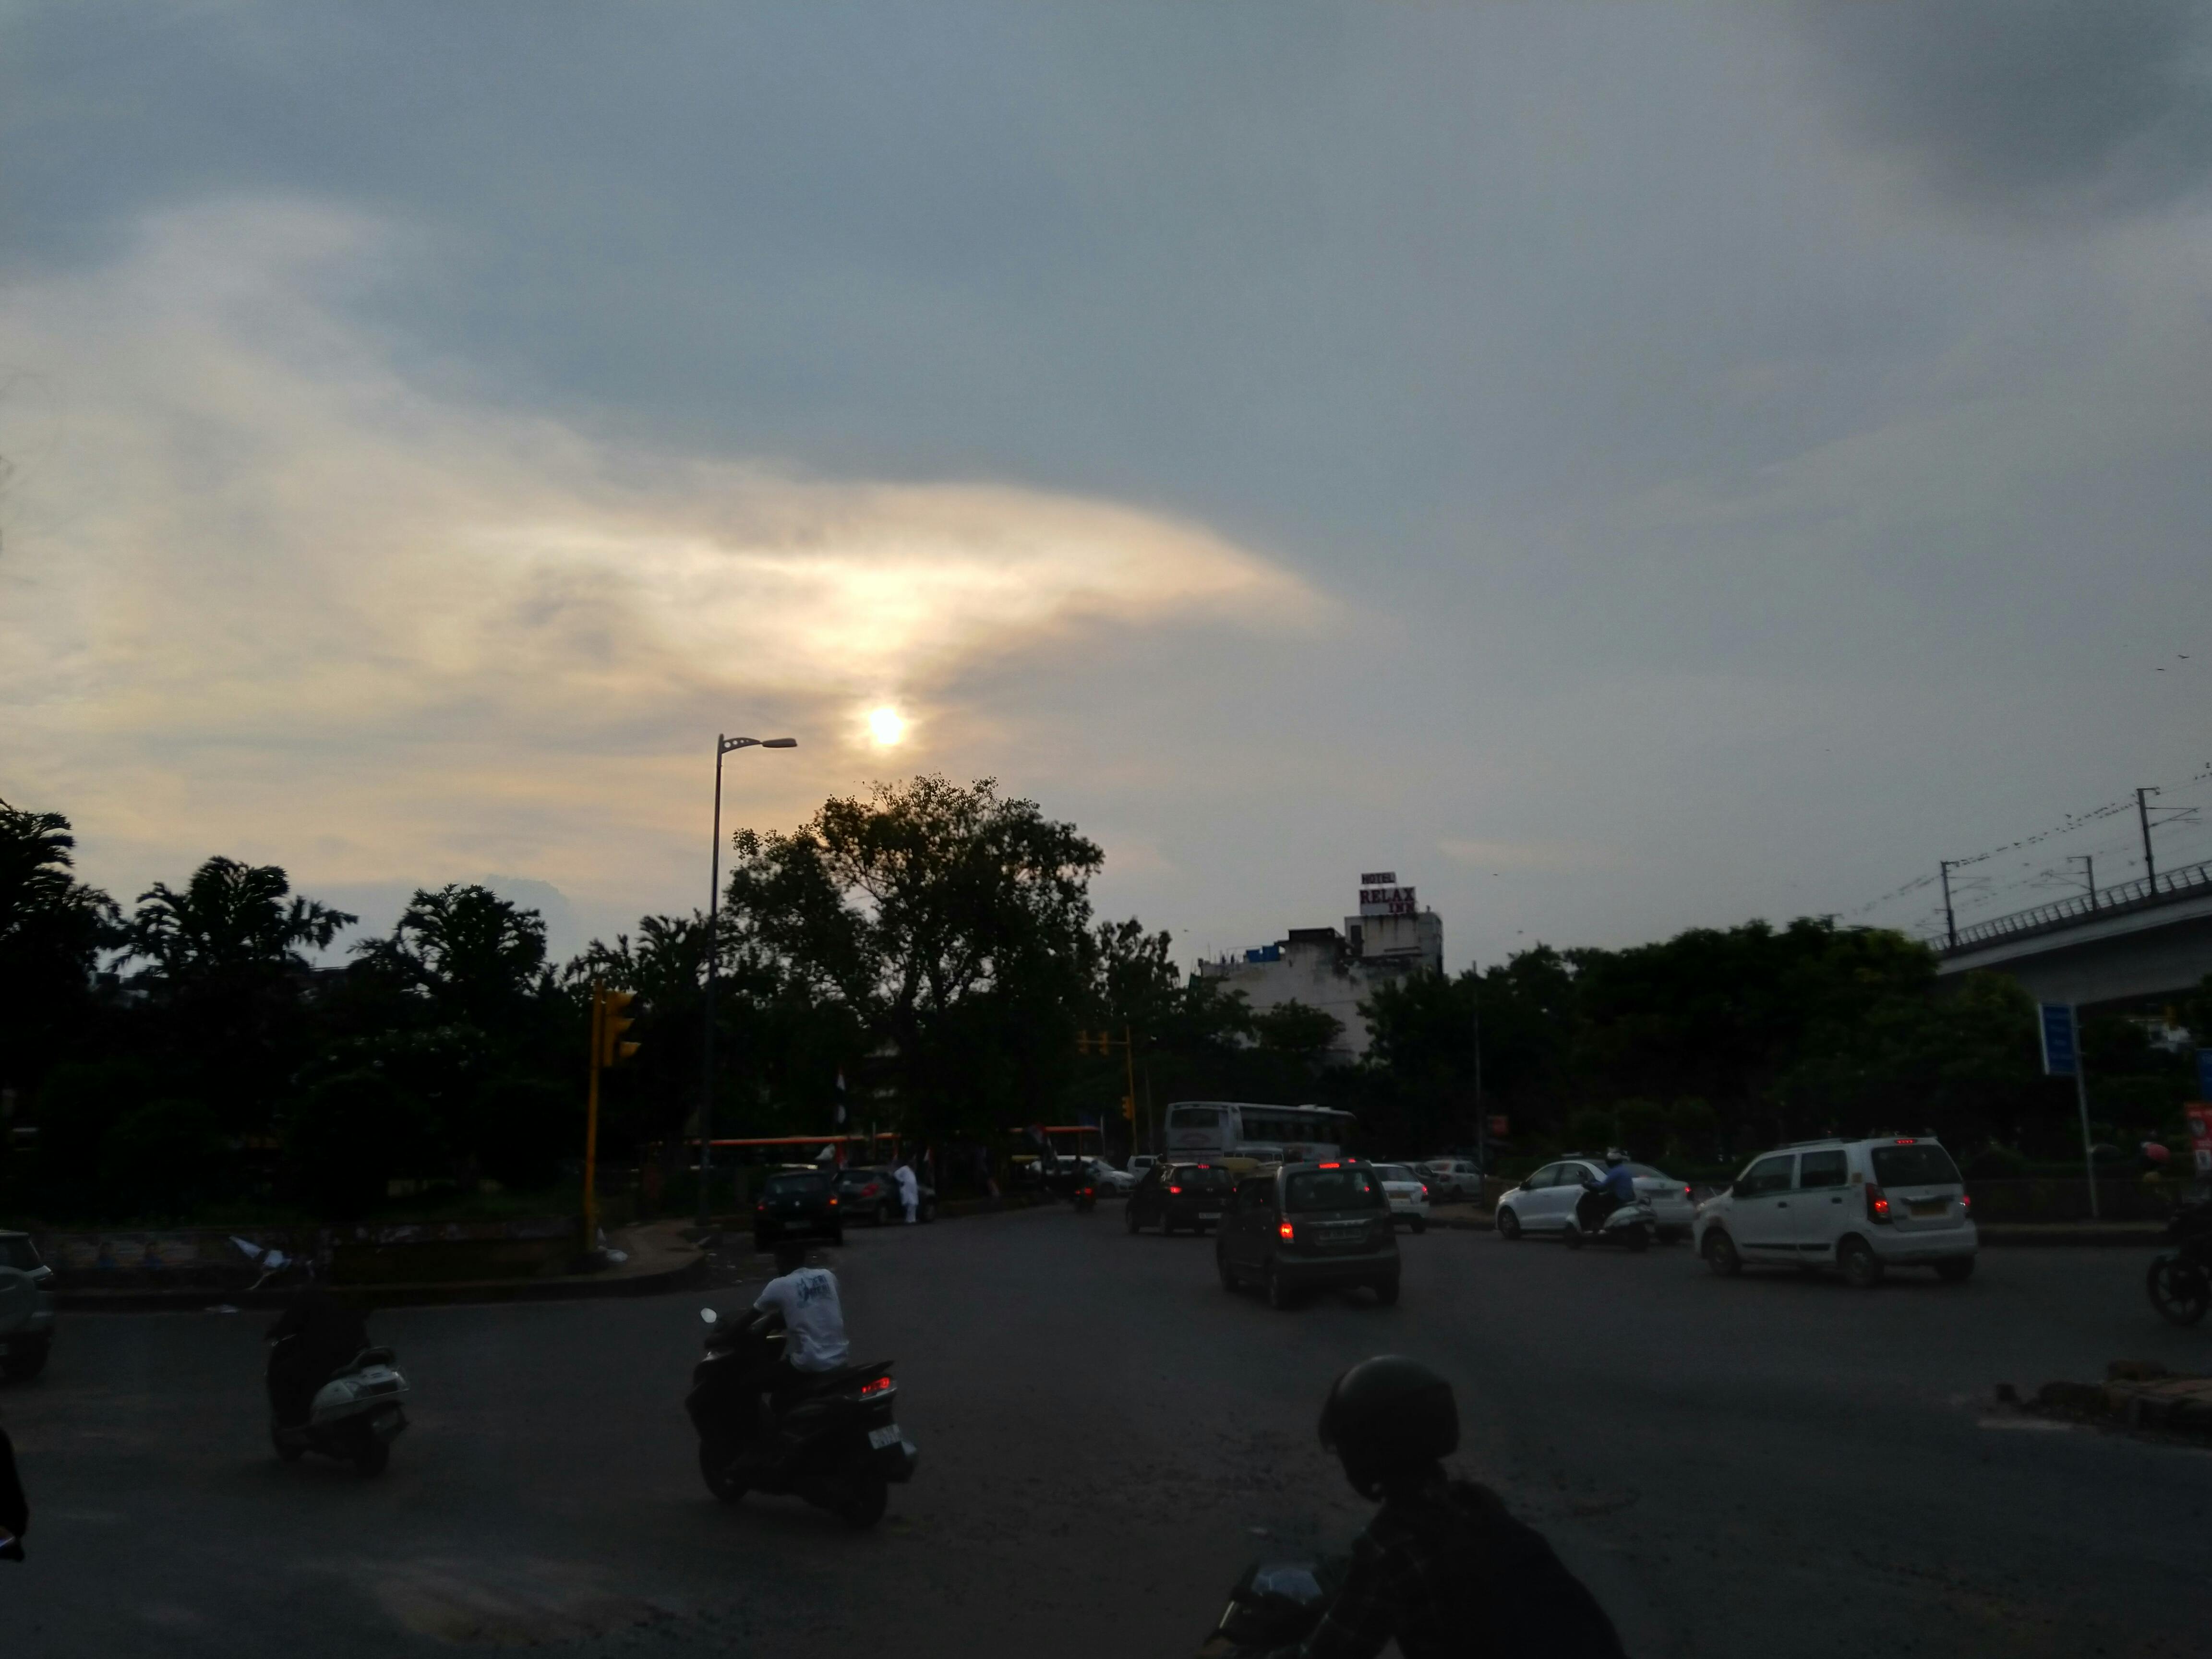 Free stock photo of evening sky, sunset, traffic circle